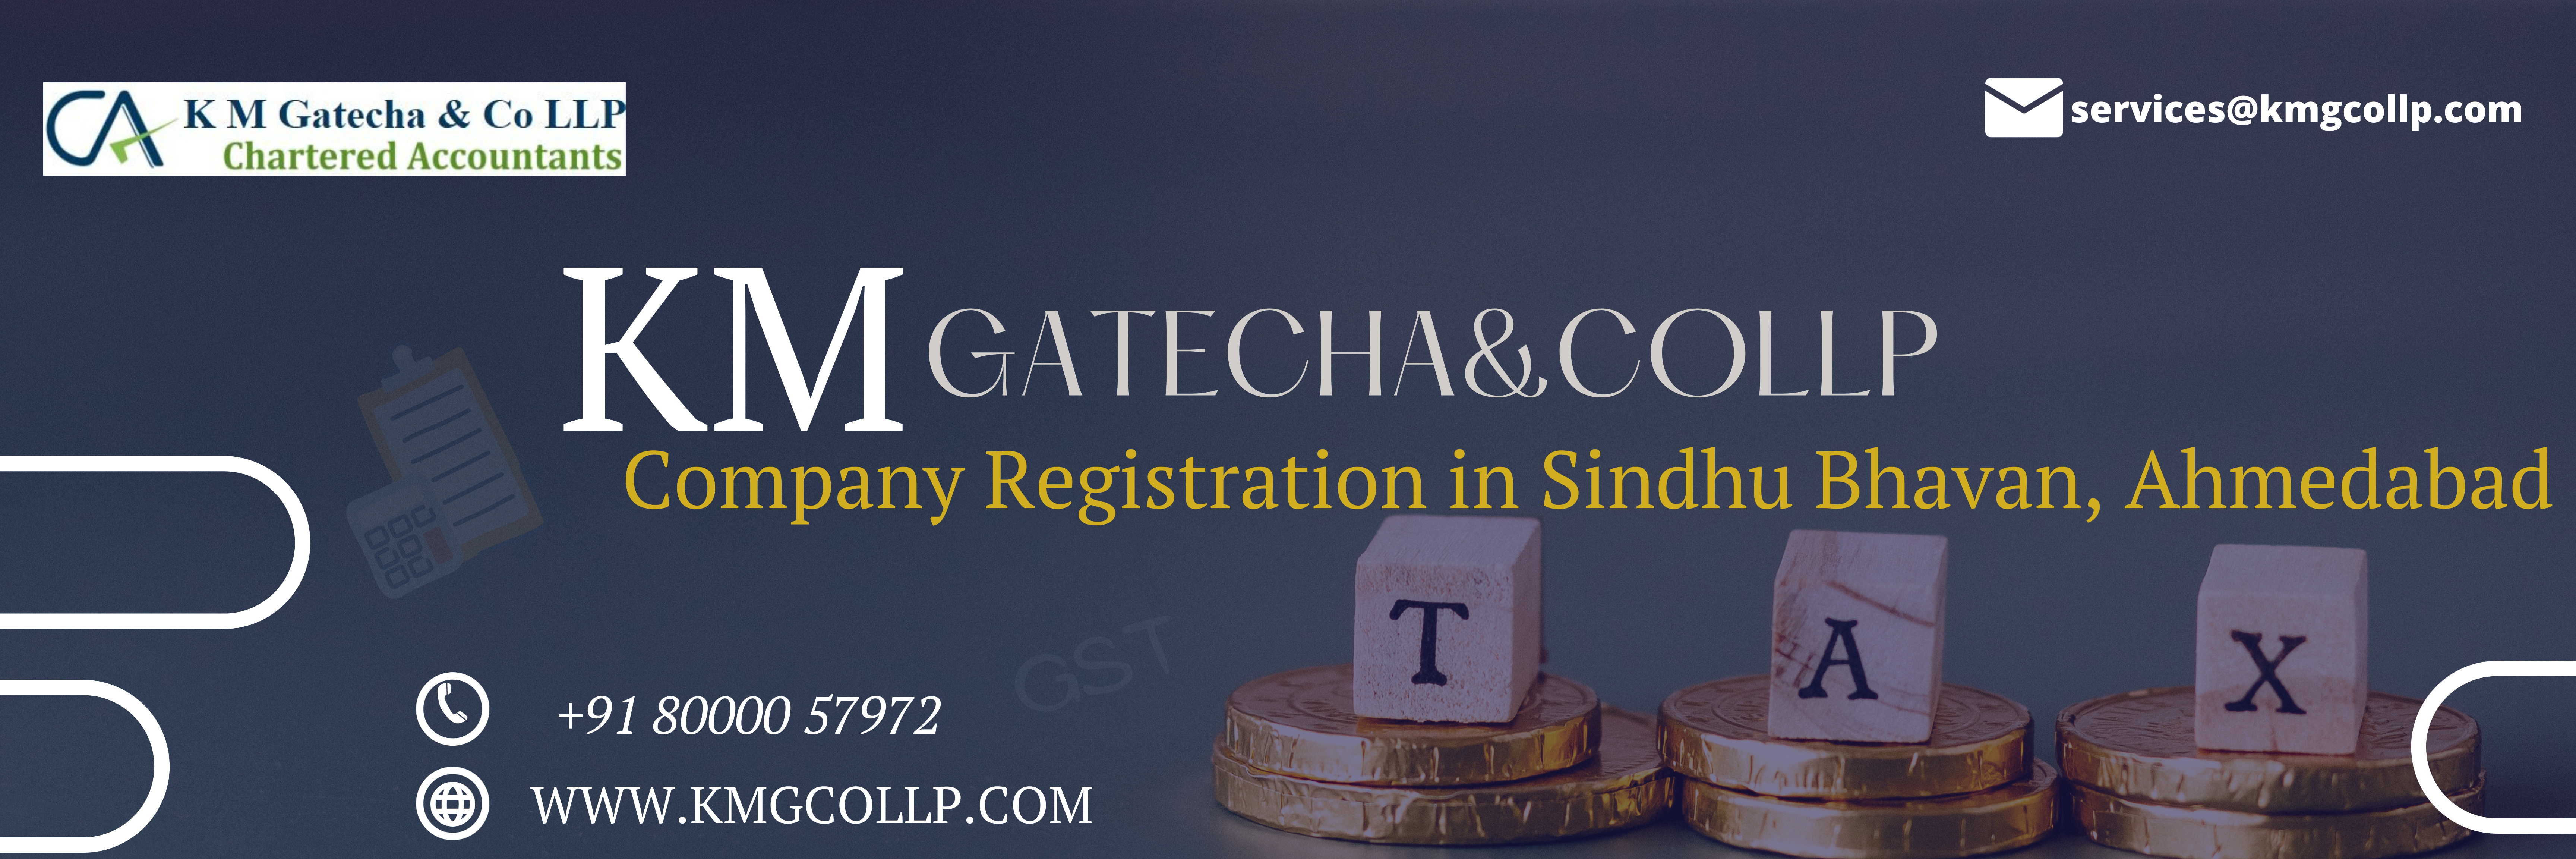 Company Registration in Sindhu Bhavan, Ahmedabad